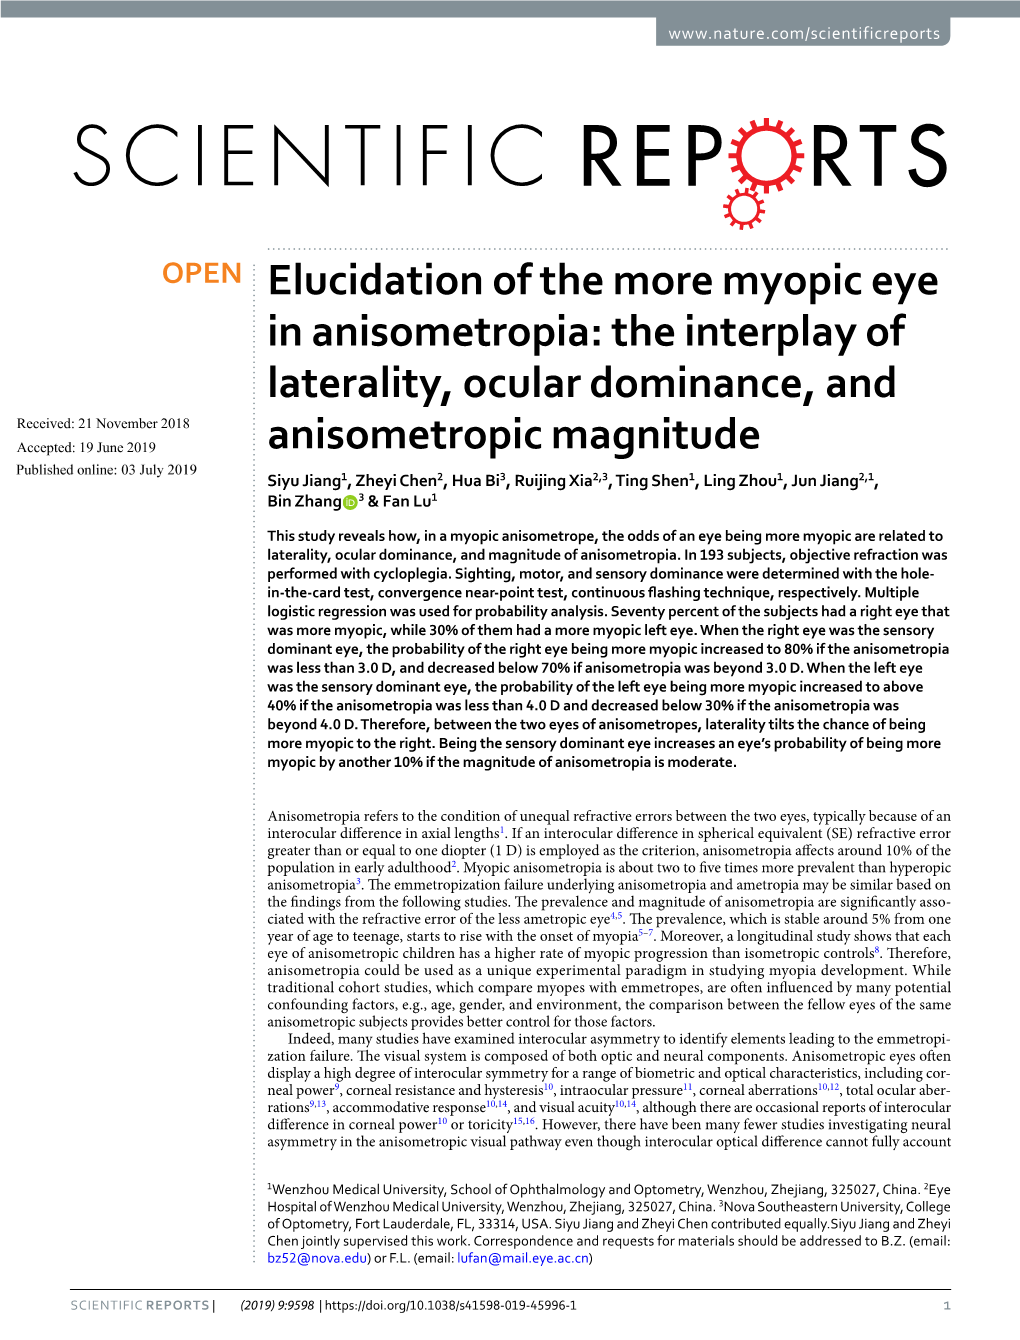 Elucidation of the More Myopic Eye in Anisometropia: the Interplay Of